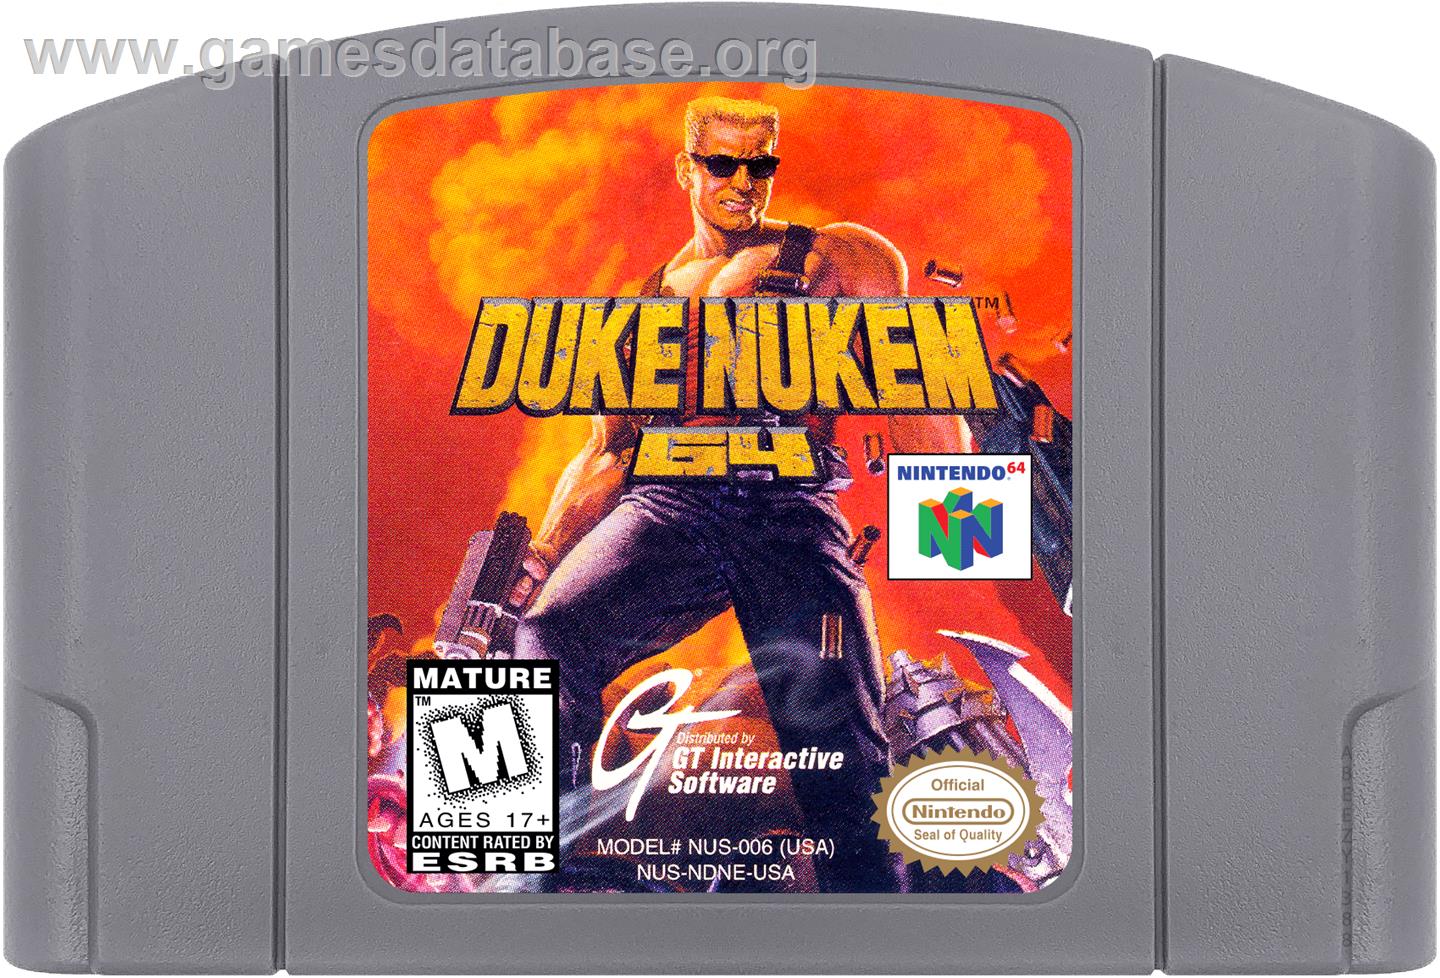 Duke Nukem 64 - Nintendo N64 - Artwork - Cartridge